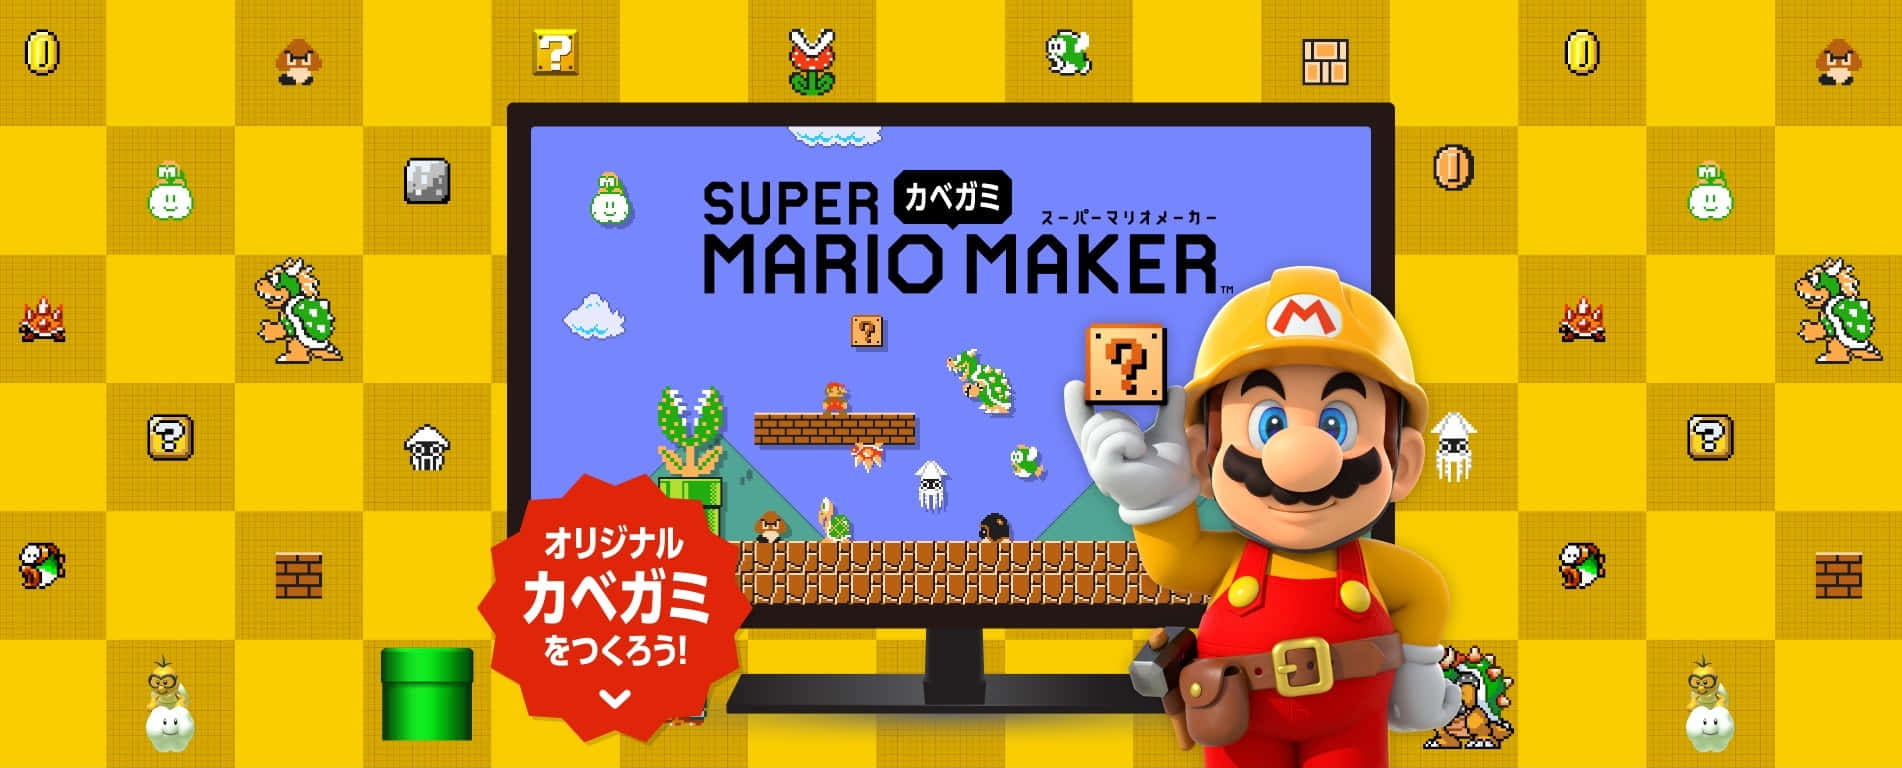 Super Mario Maker Level Design in Action Wallpaper